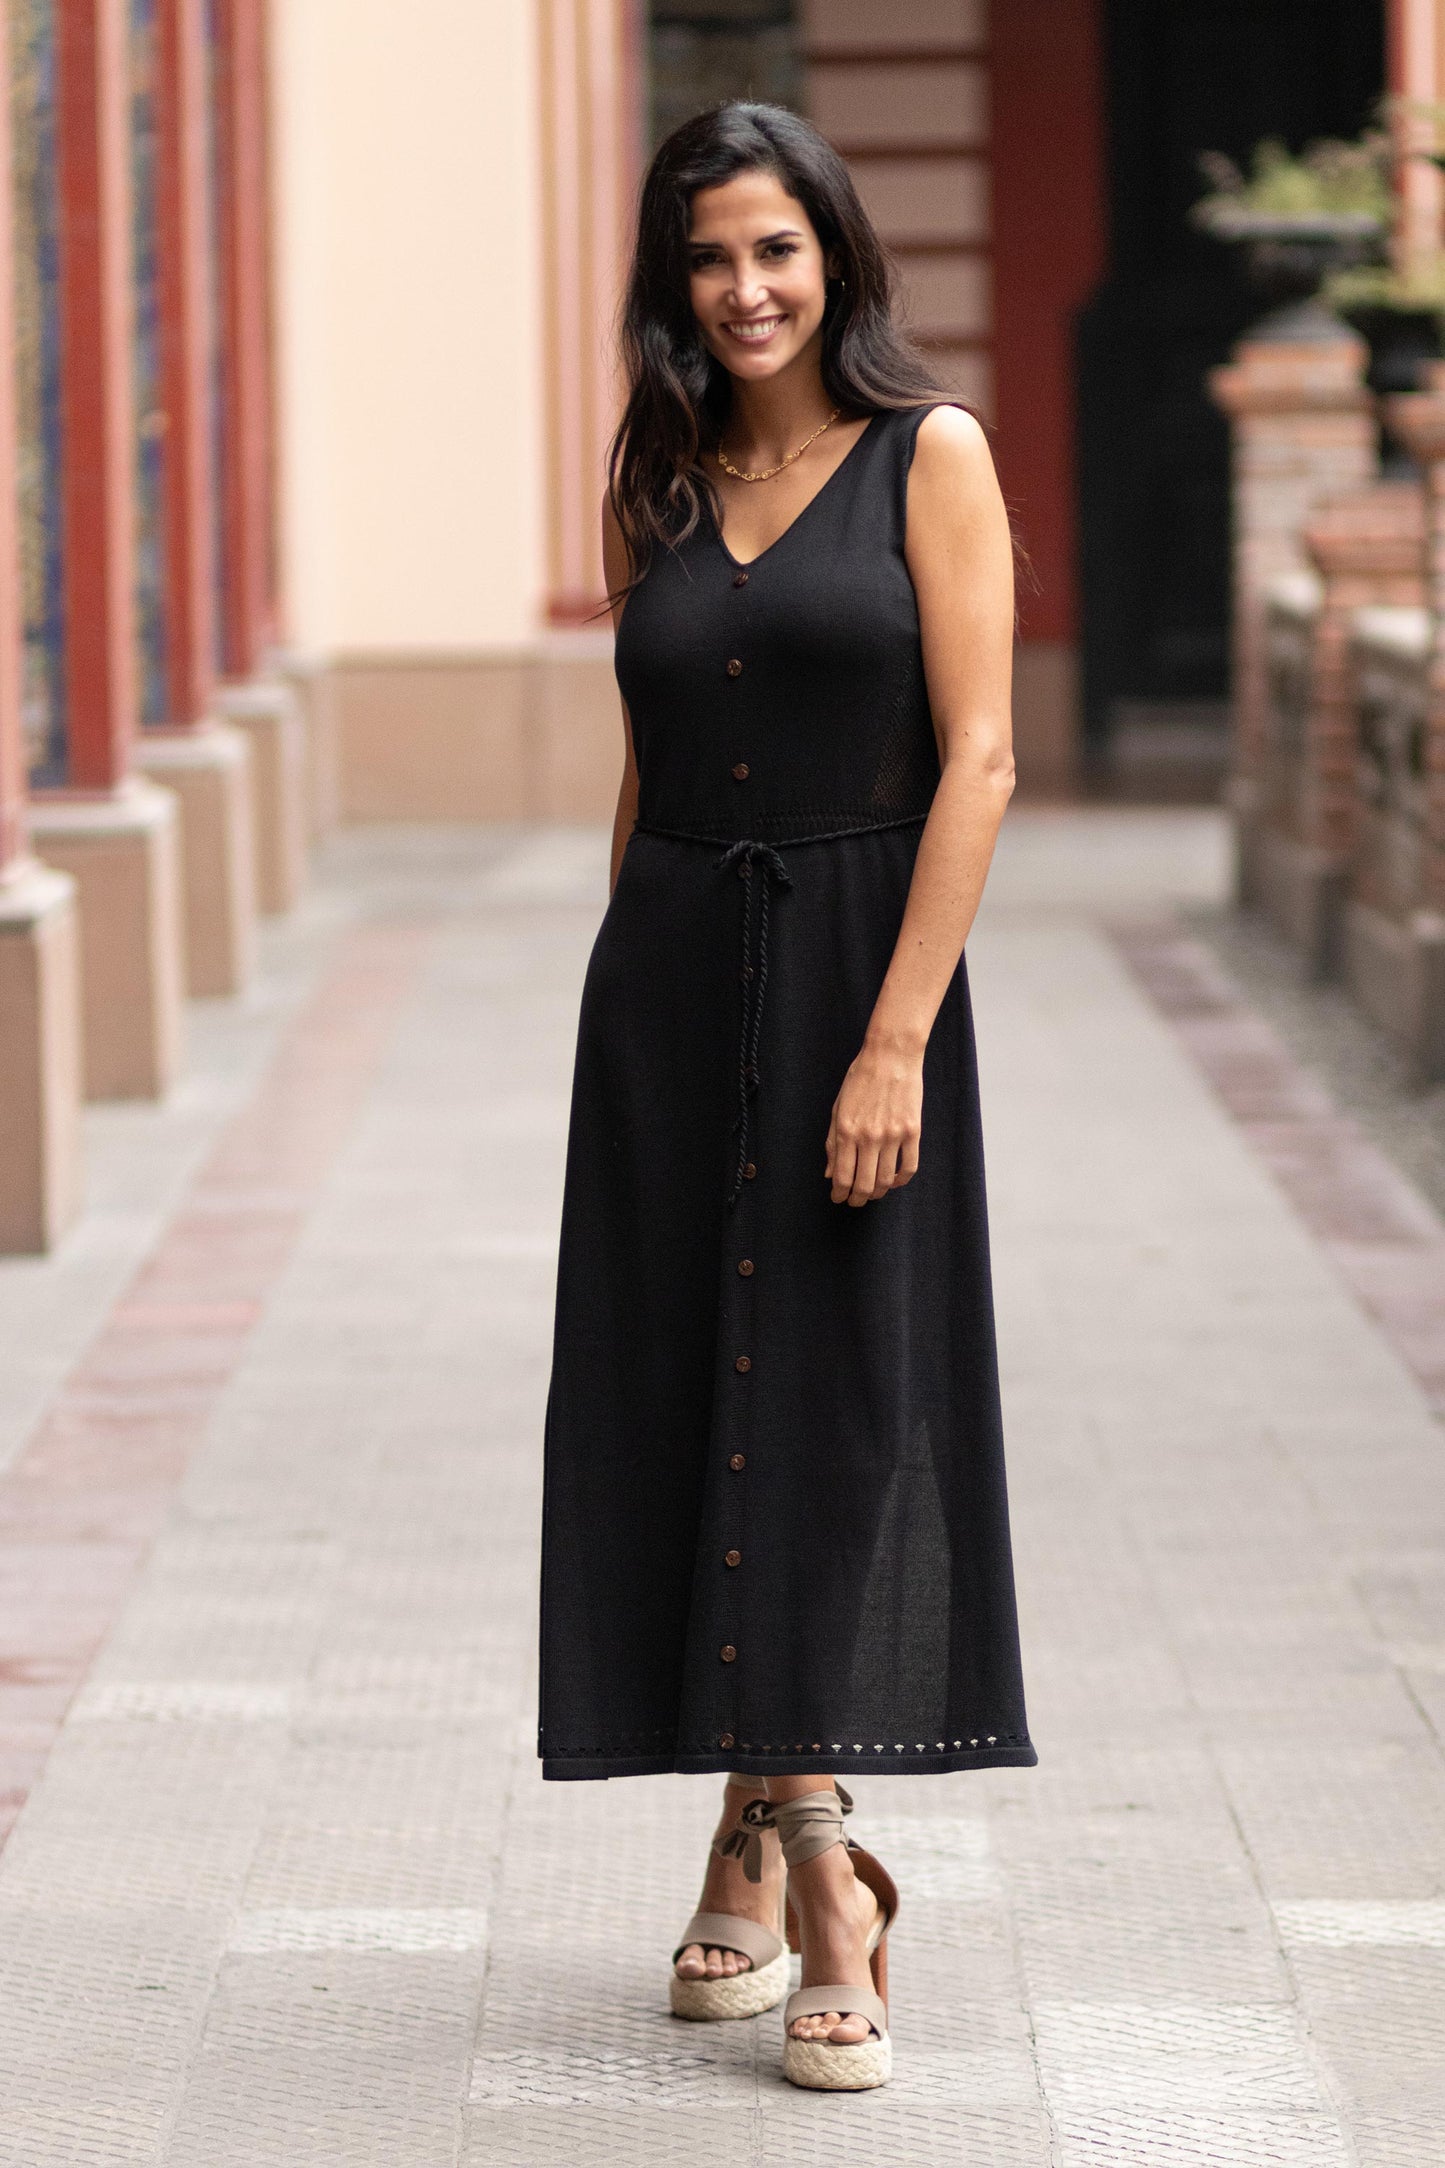 Toqo in Black Organic Cotton Buttoned Maxi Dress in Black from Peru